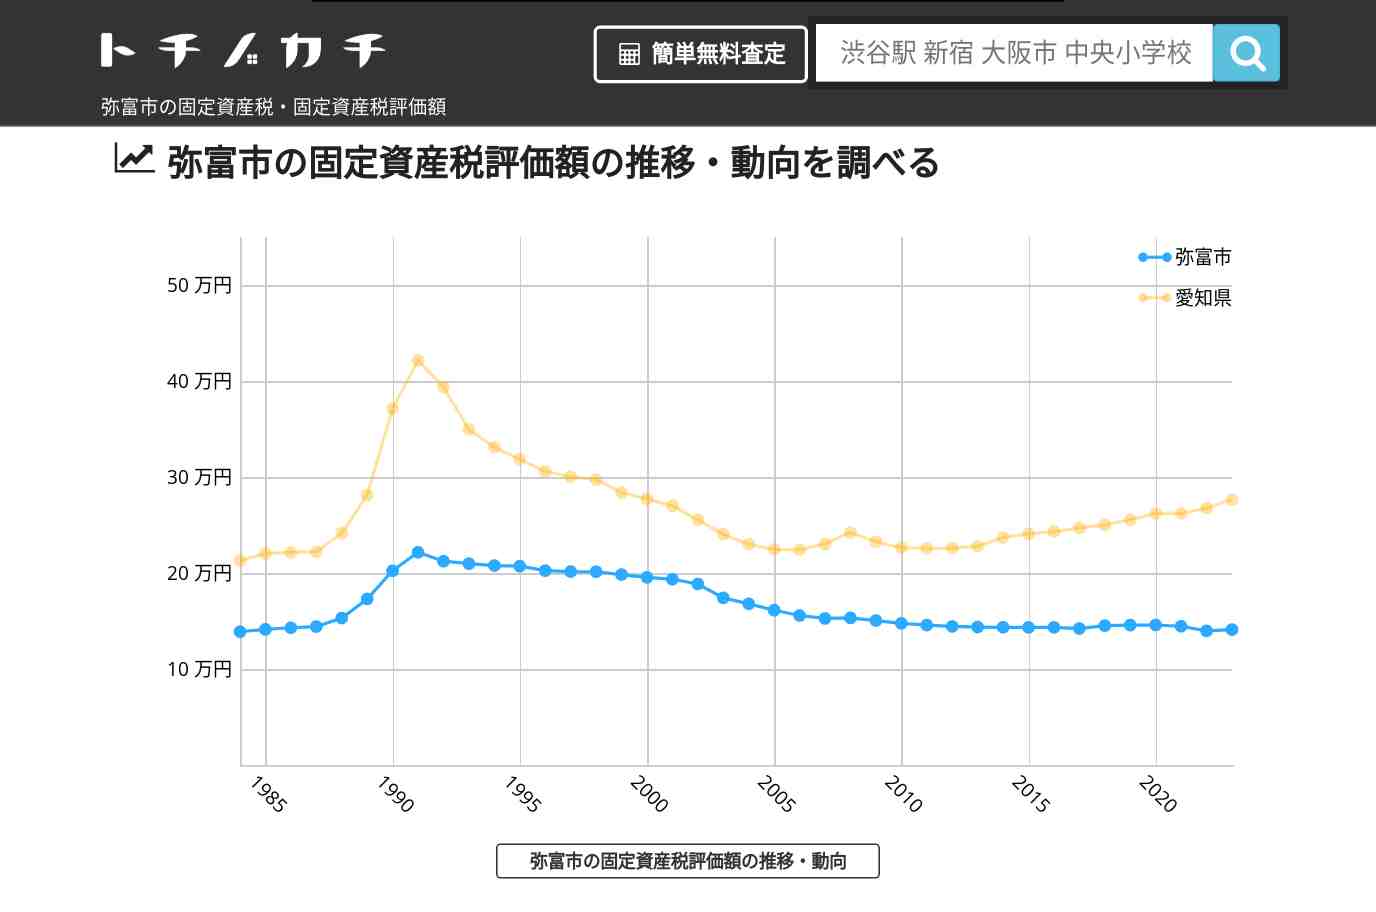 弥生小学校(愛知県 弥富市)周辺の固定資産税・固定資産税評価額 | トチノカチ